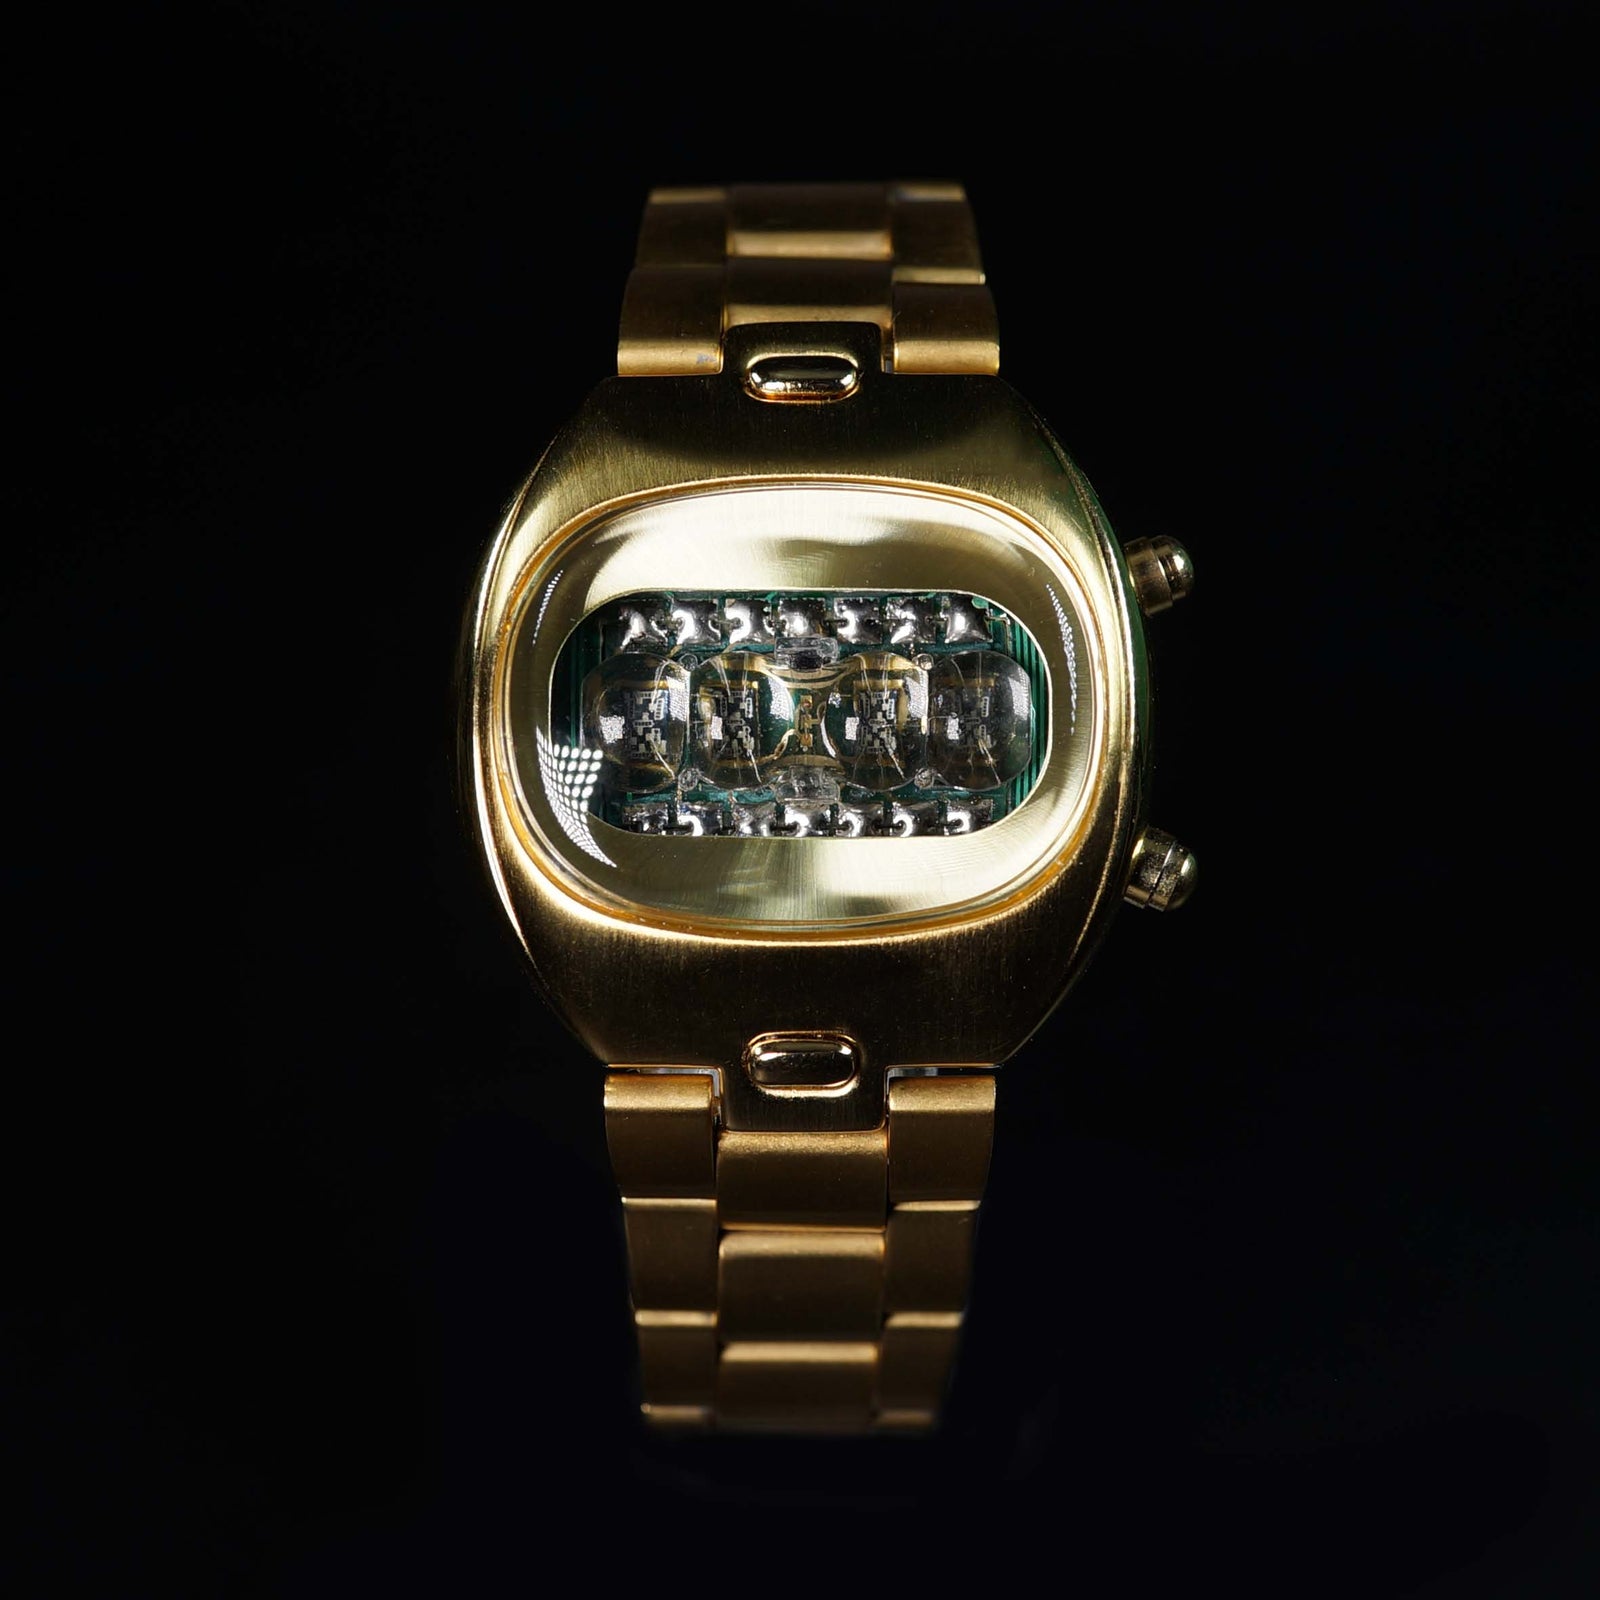 LED Computer Watch 2|EA102|70s Retro Future | 腕時計 デジタル レトロフューチャー 近未来 ハイテク ビンテージ